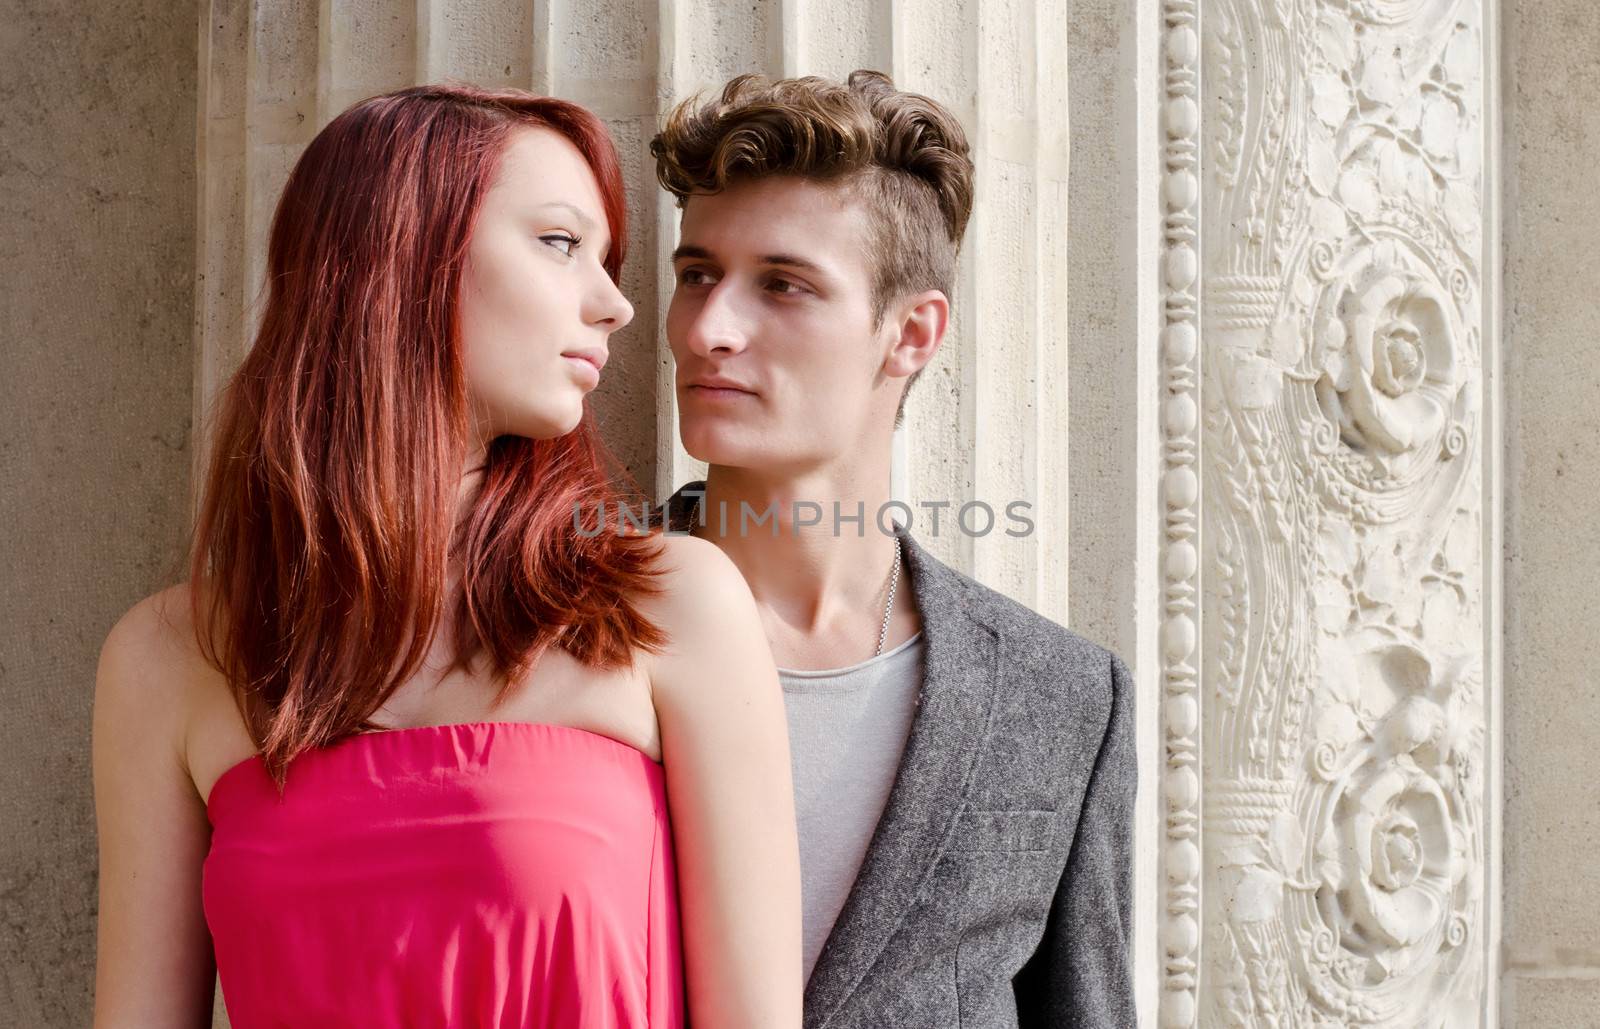 Elegant young couple next to old stone column by artofphoto